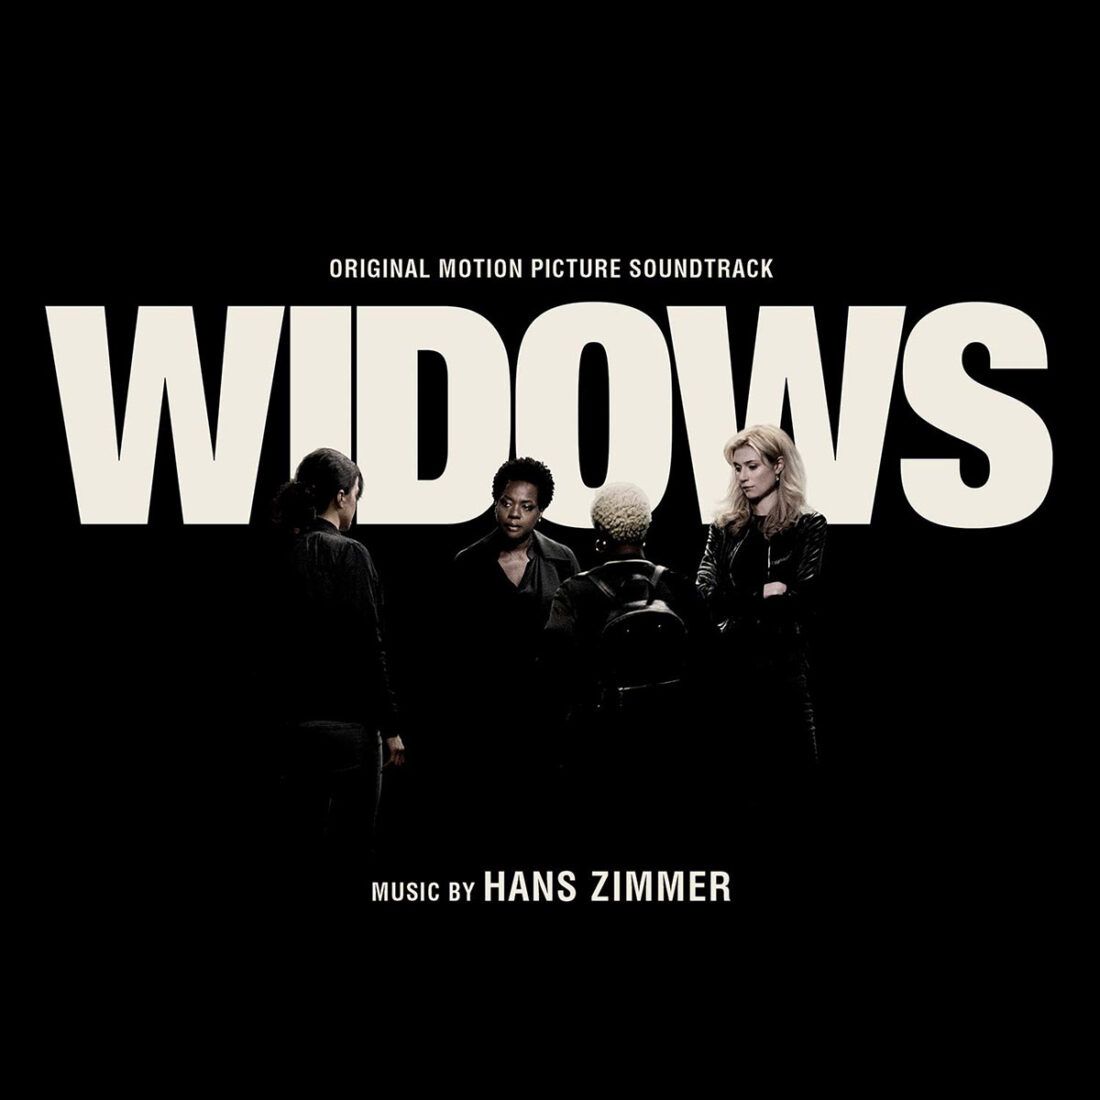 Widows Original Motion Picture Soundtrack CD Edition